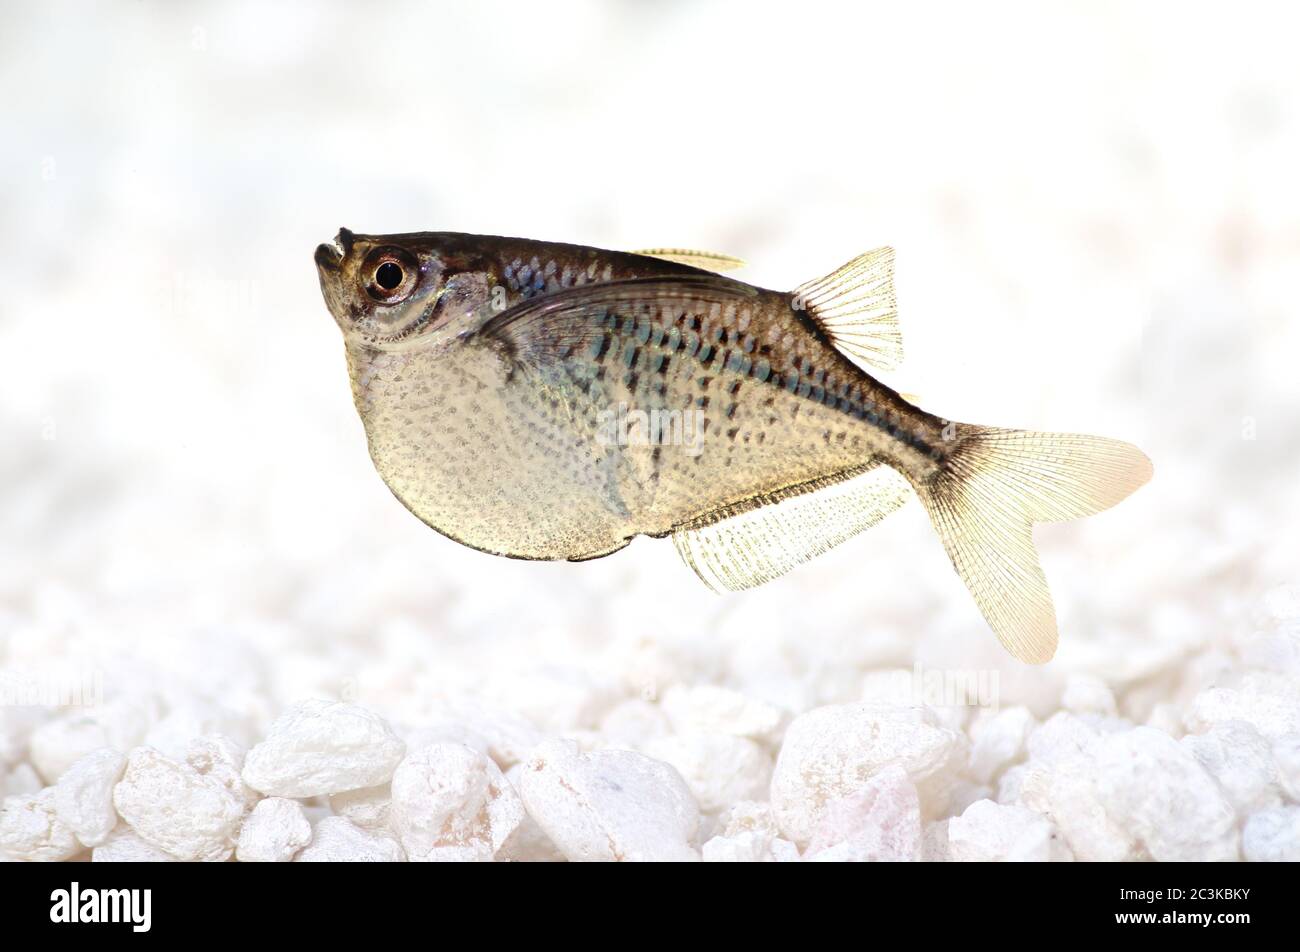 Common Silver Hatchetfish Gasteropelecus sternicla aquarium fish Stock Photo